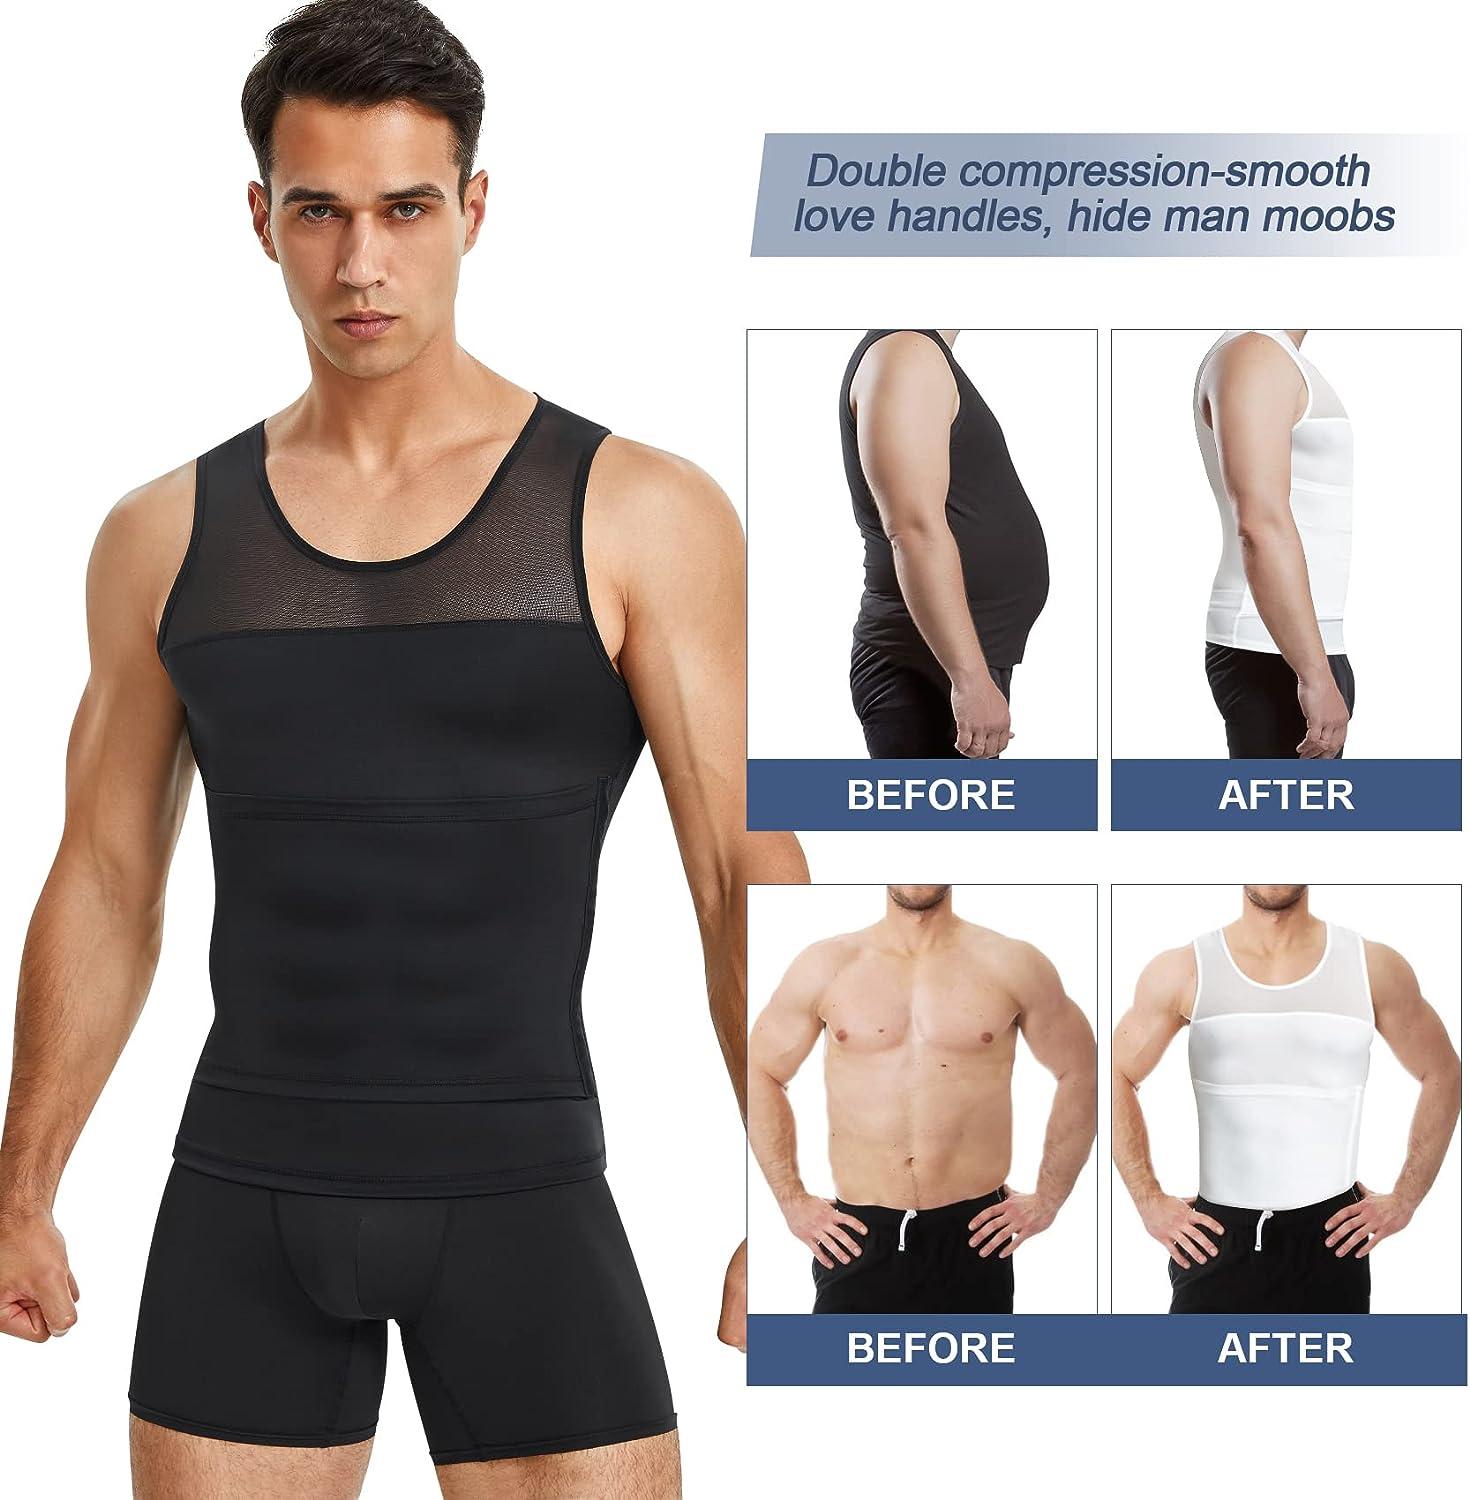 MOLUTAN Mens Compression Shirt Belly Slimming Body Shaper Vest